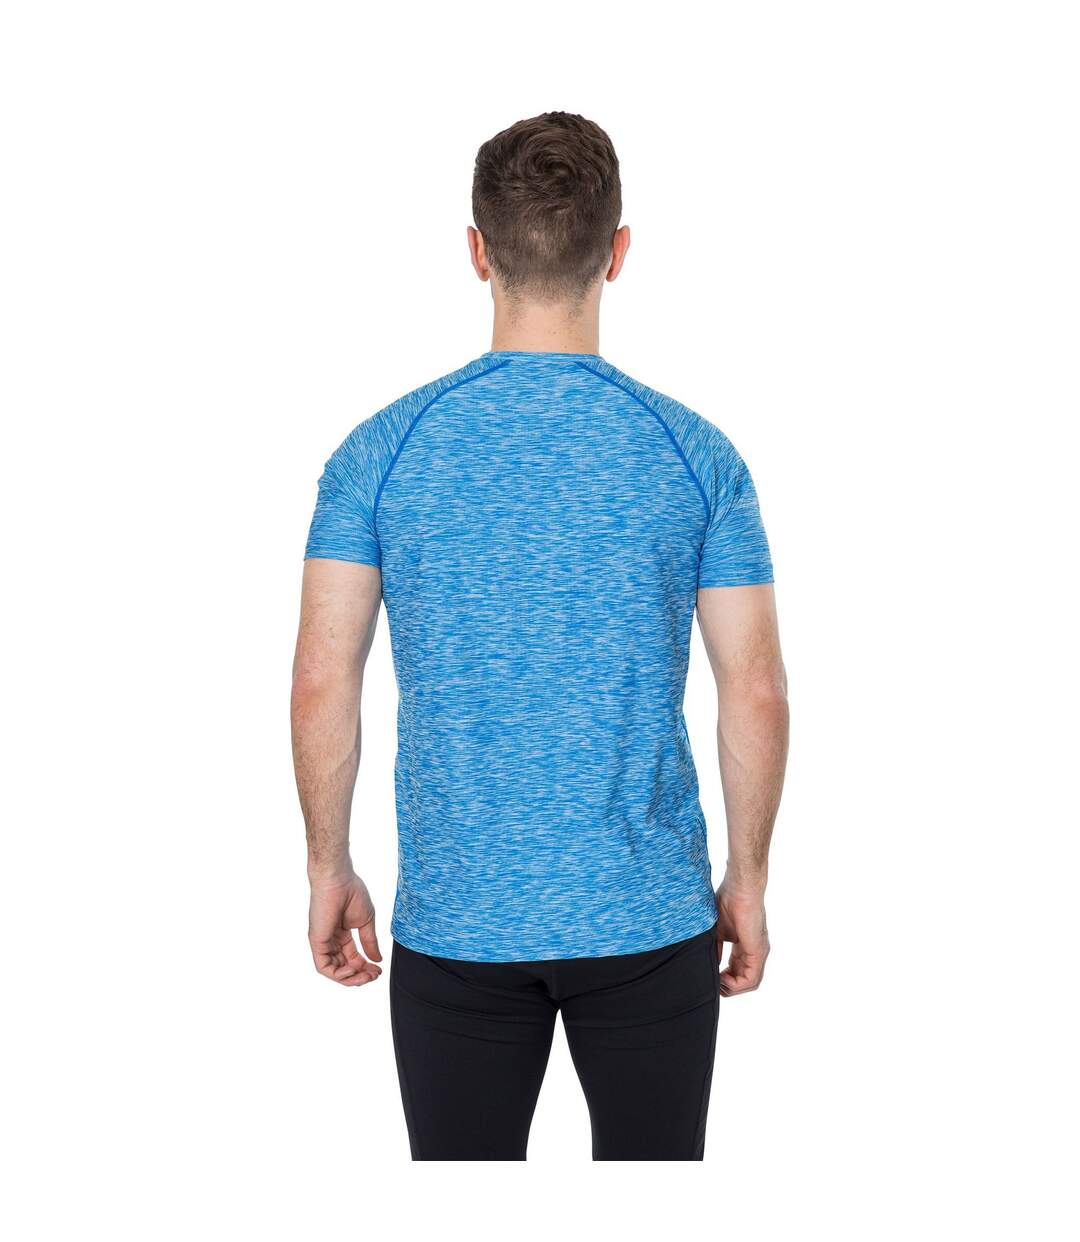 Trespass Mens Gaffney Active T-Shirt (Bright Blue Marl) - UTTP4069